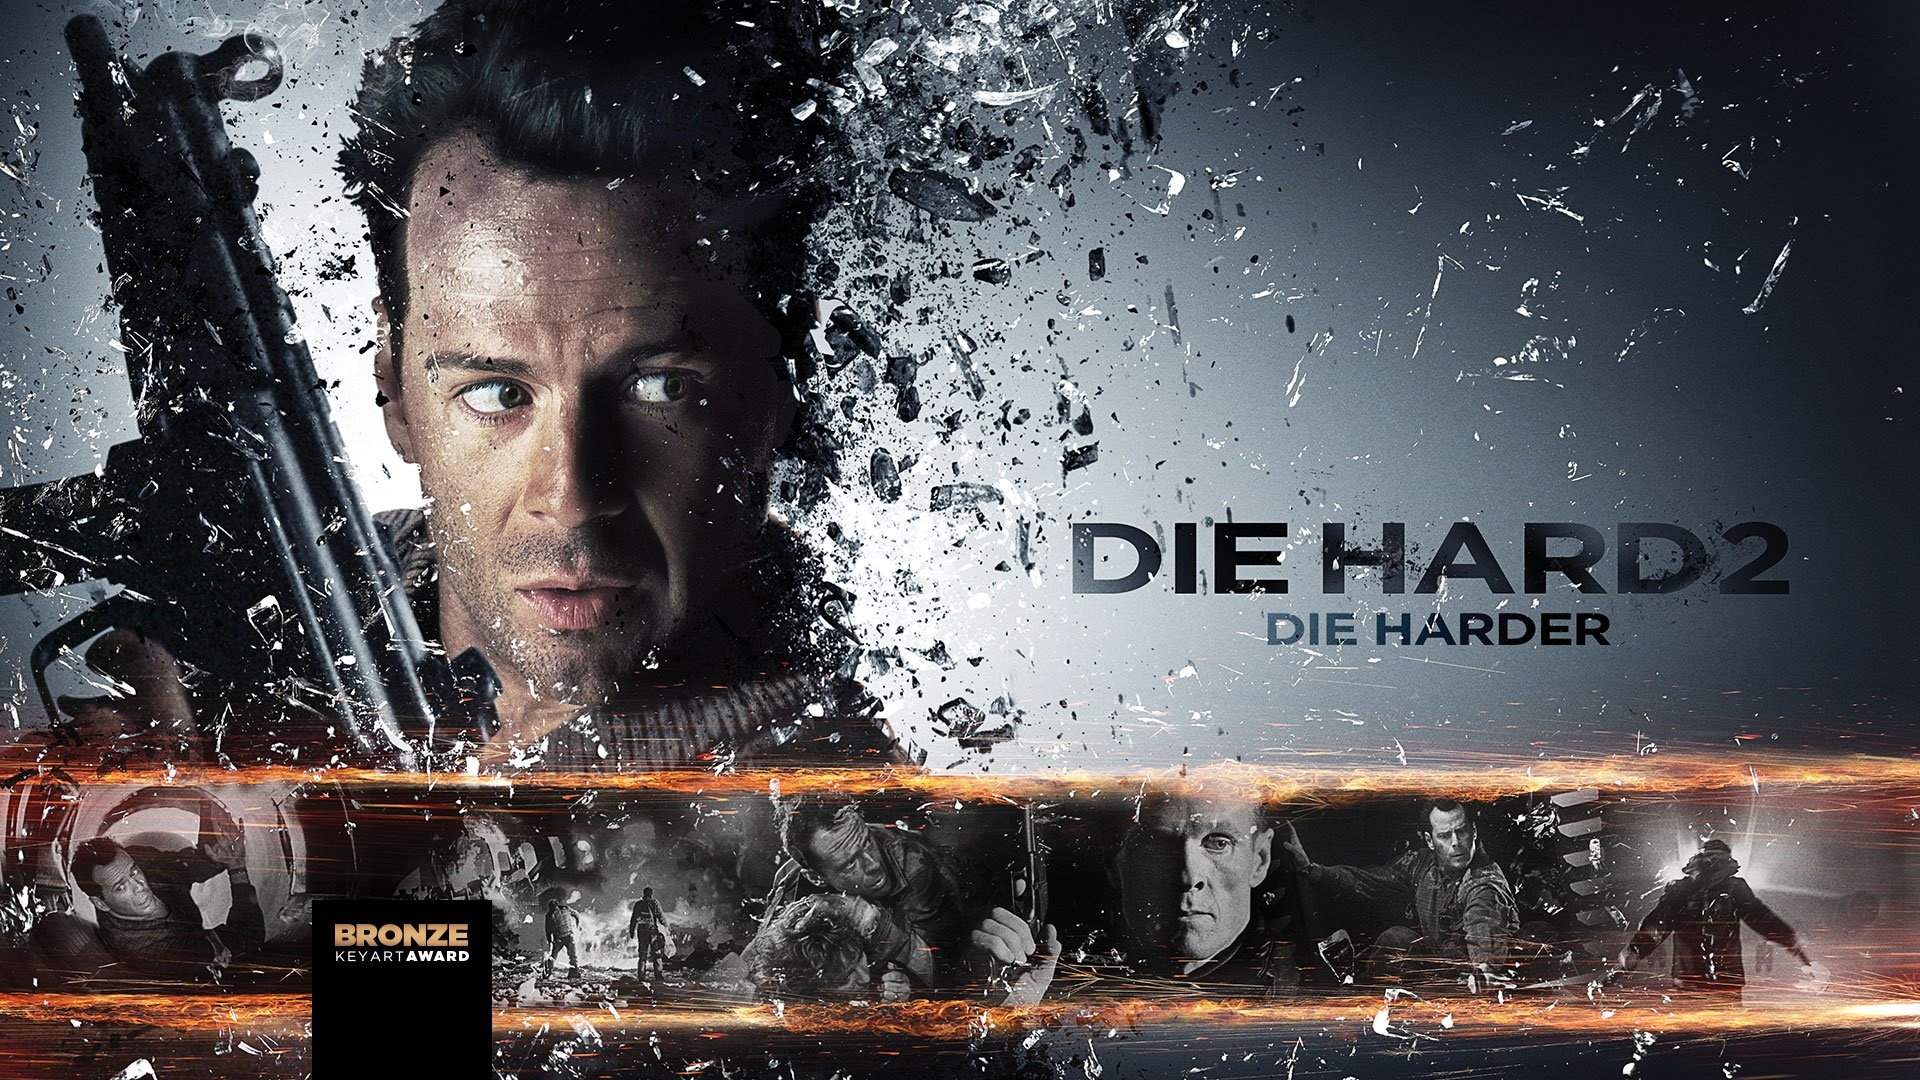 Die Hard 2, Intense movie wallpapers, Stunning 4k pictures, Memorable moments, 1920x1080 Full HD Desktop